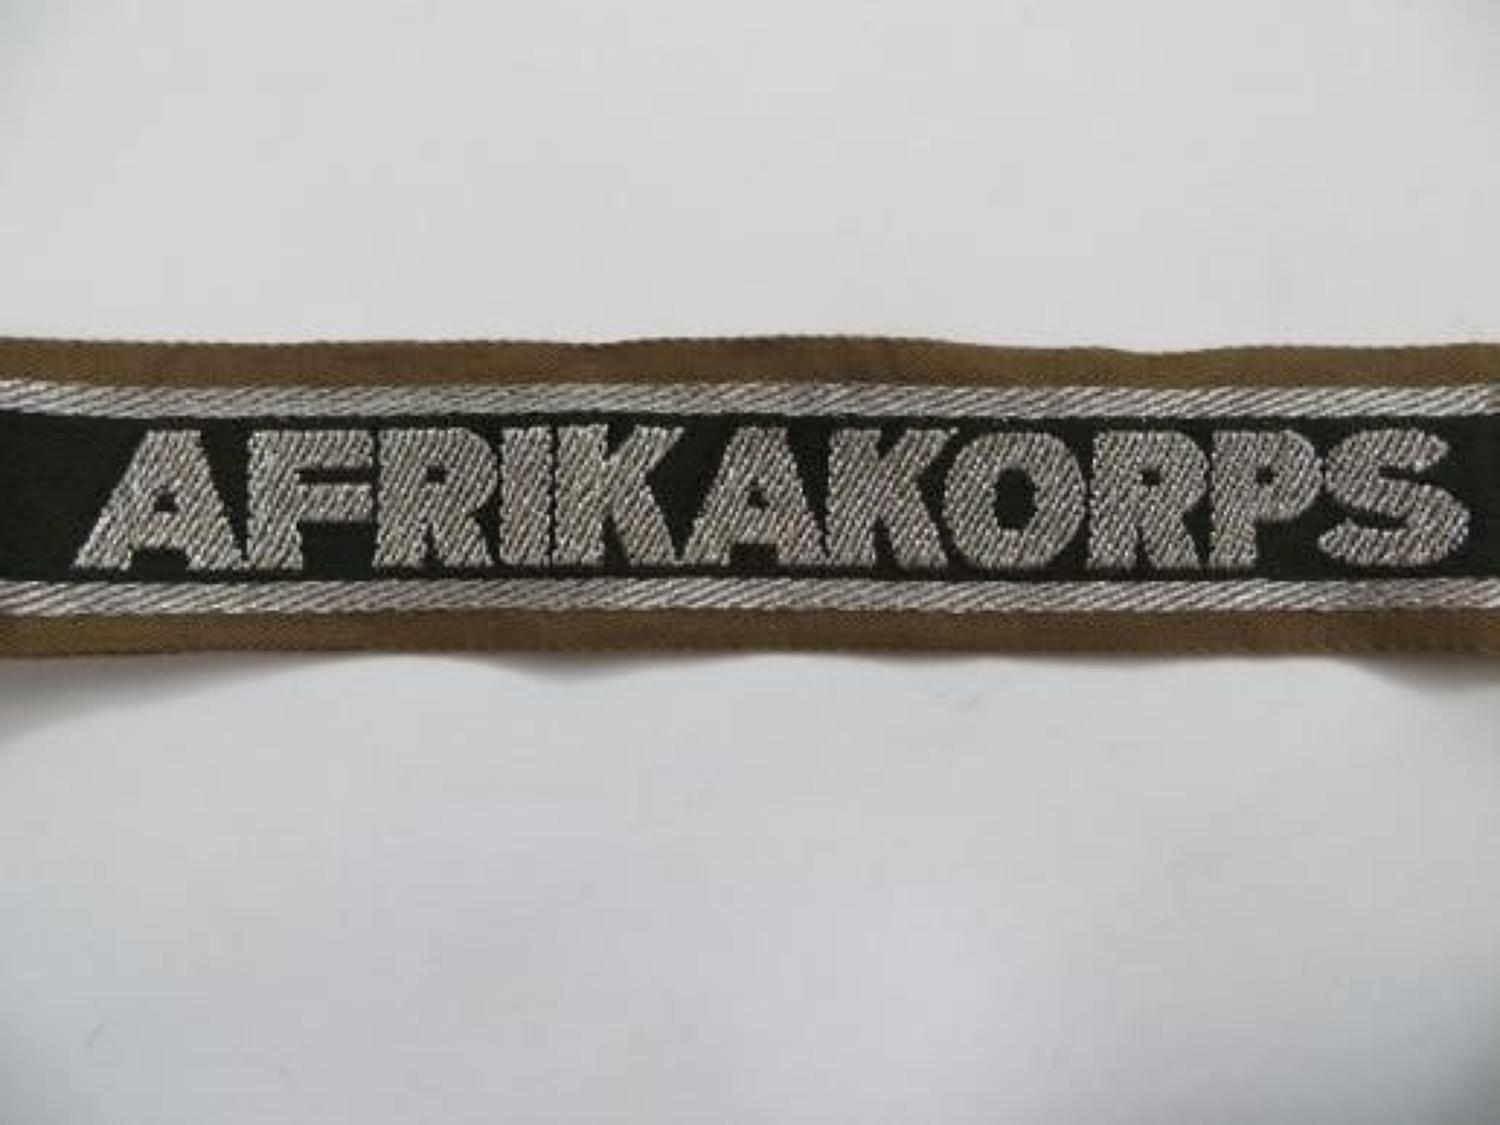 Afrikakorps Cuff Title